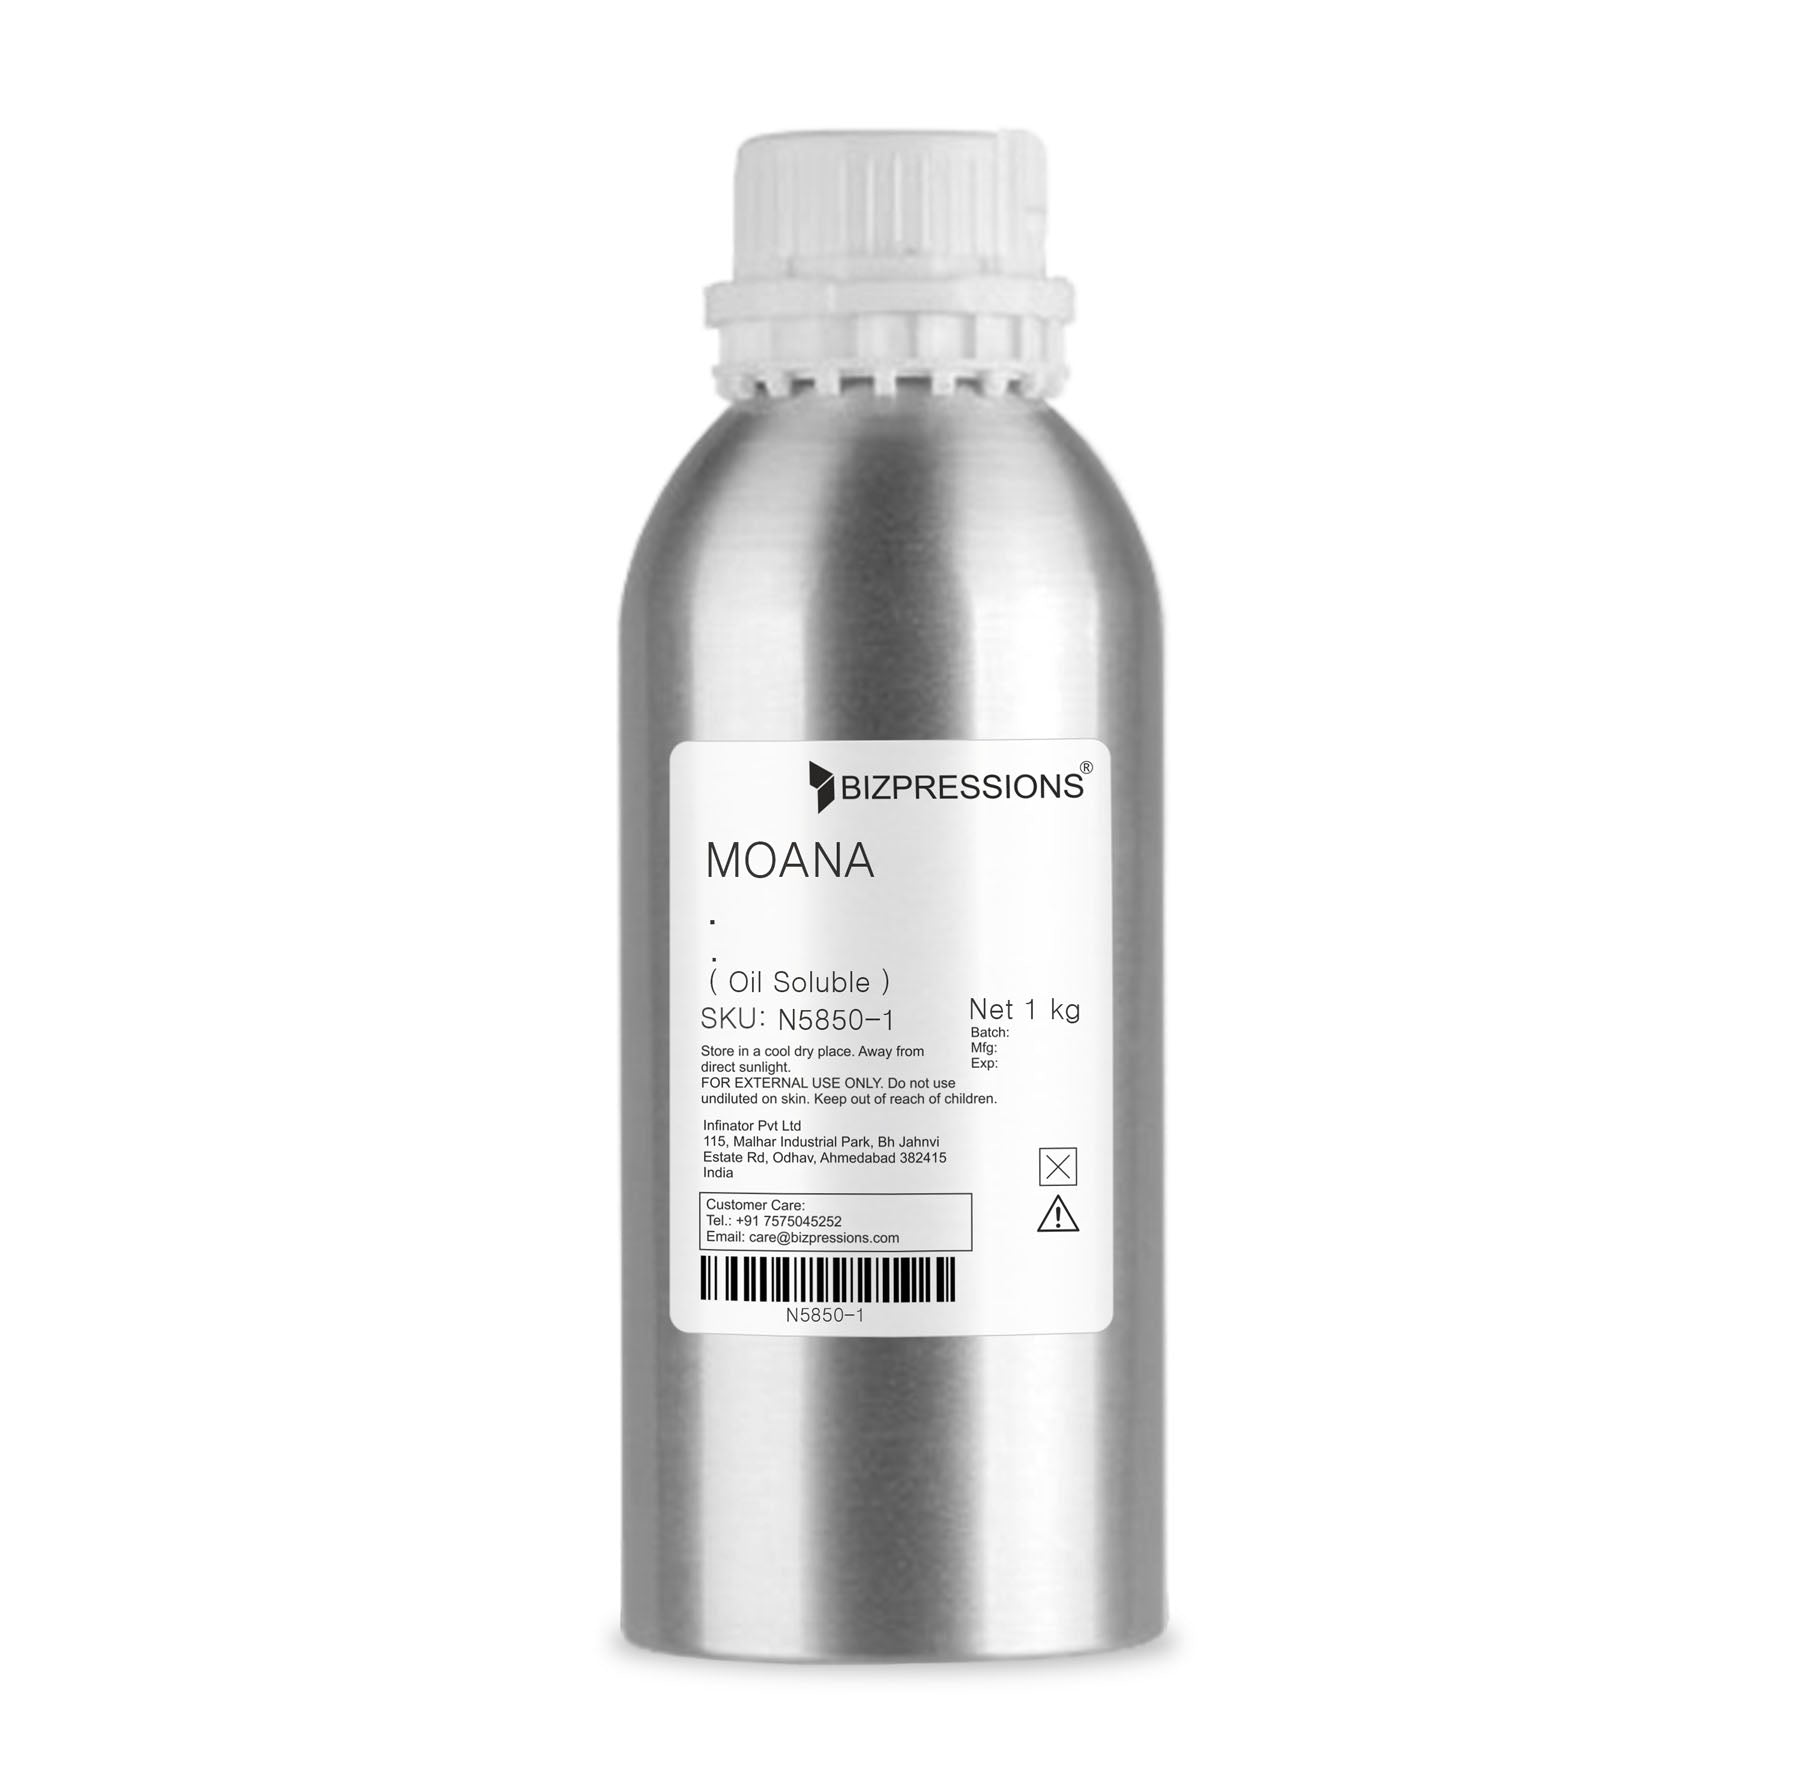 MOANA - Fragrance ( Oil Soluble ) - 1 kg